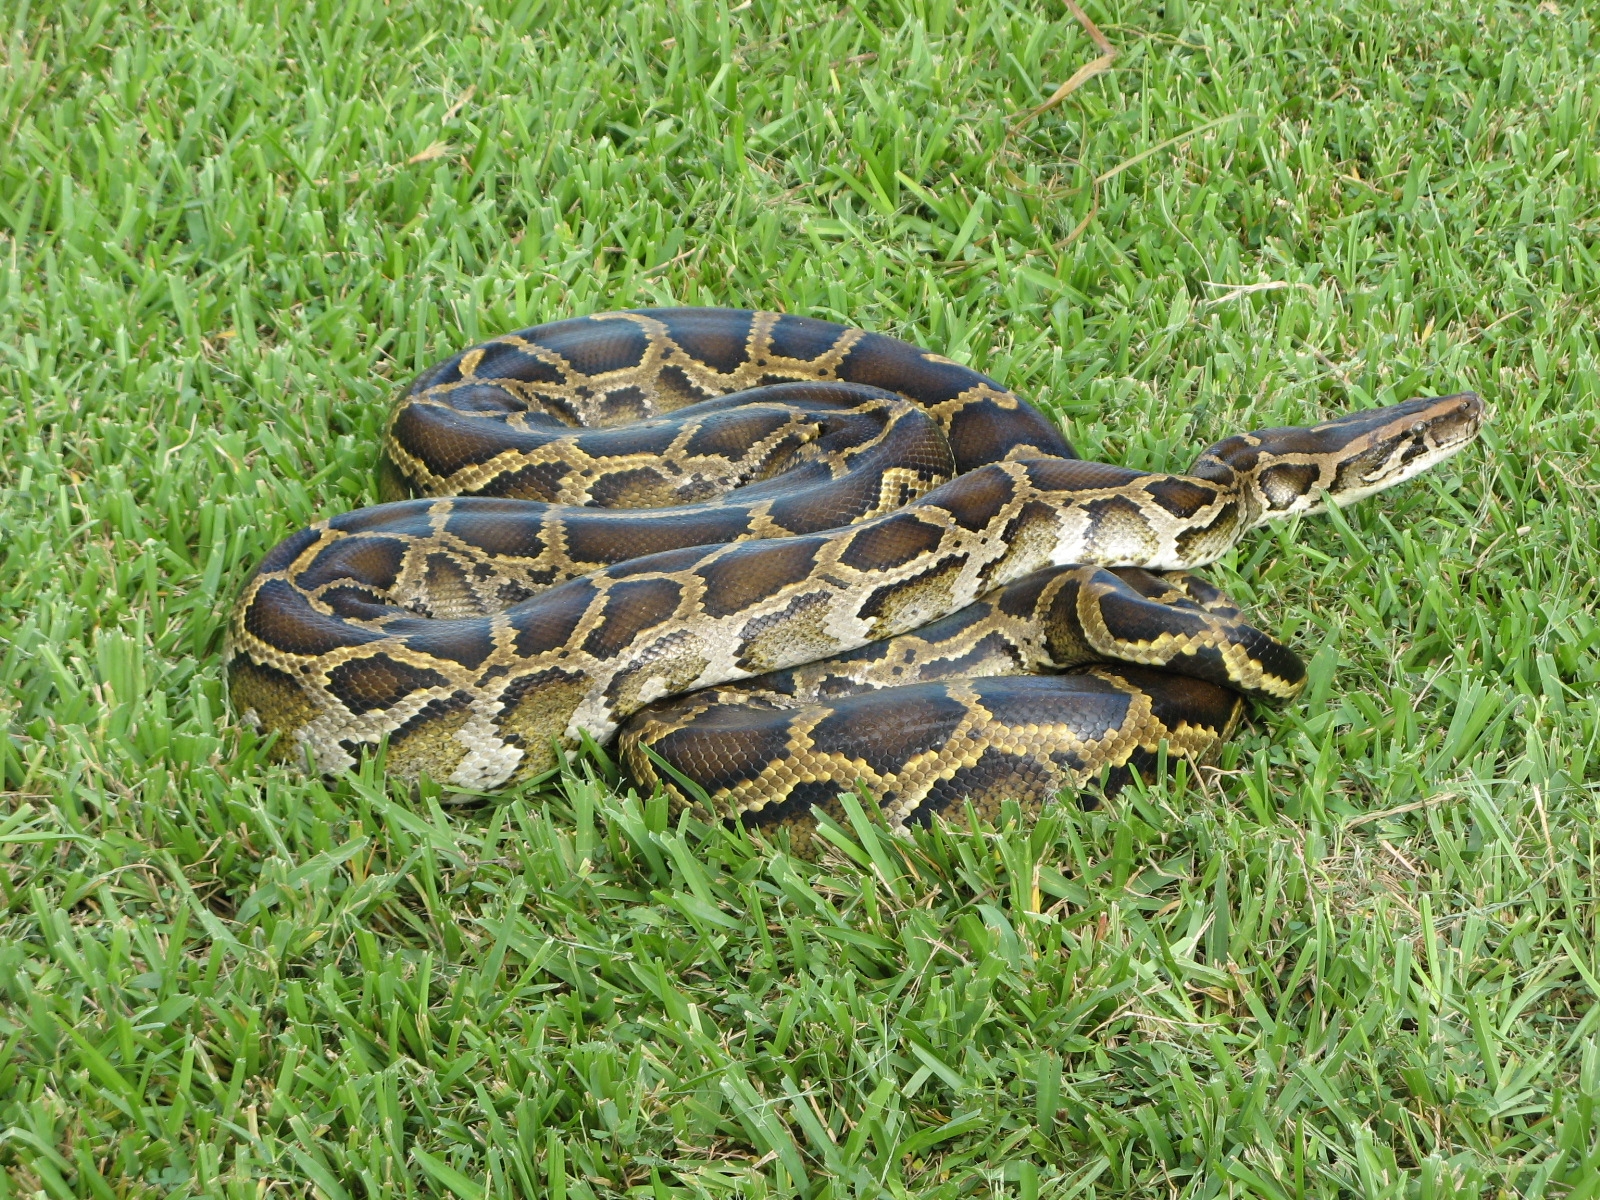 File:Burmese python (6887388927).jpg - Wikimedia Commons